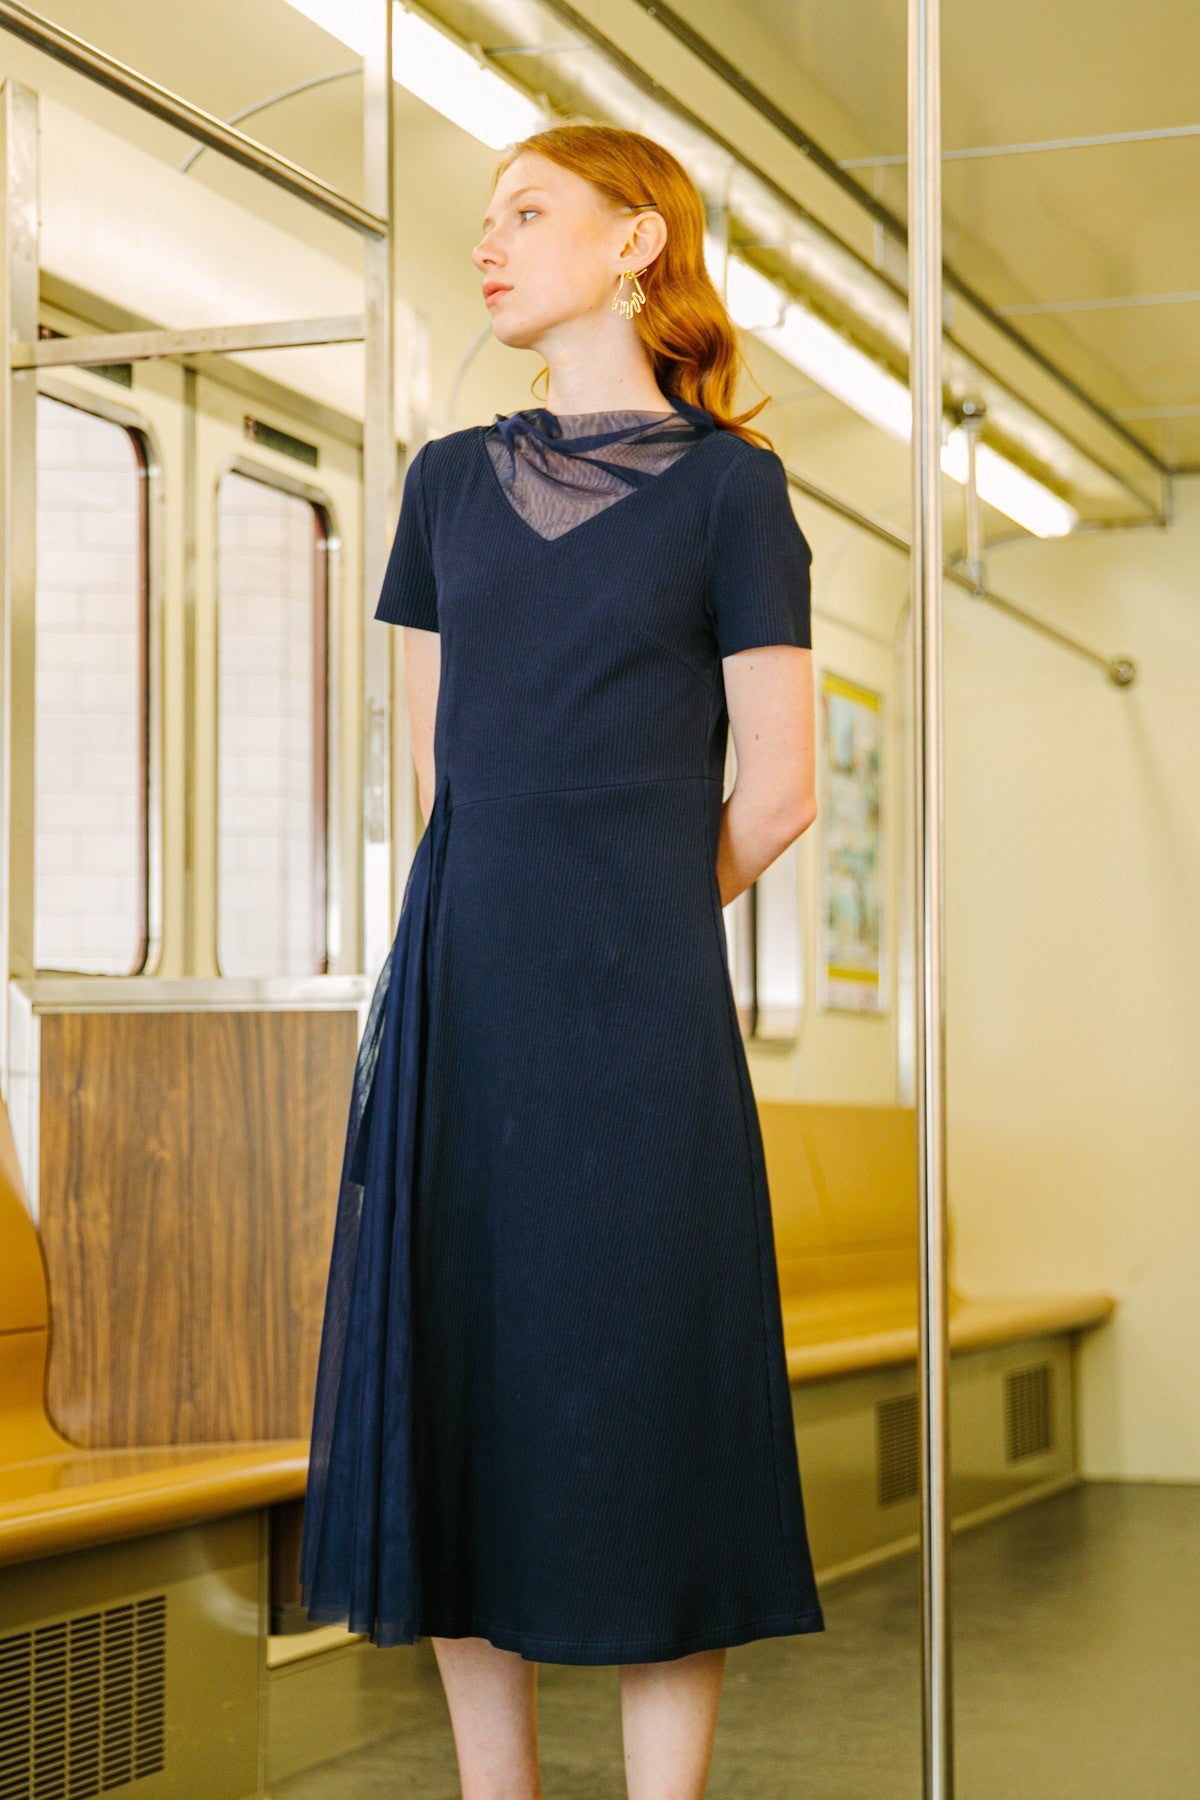 SKYE San Francisco SF California shop ethical sustainable modern minimalist luxury women fashion Corentin Dress Blue 2